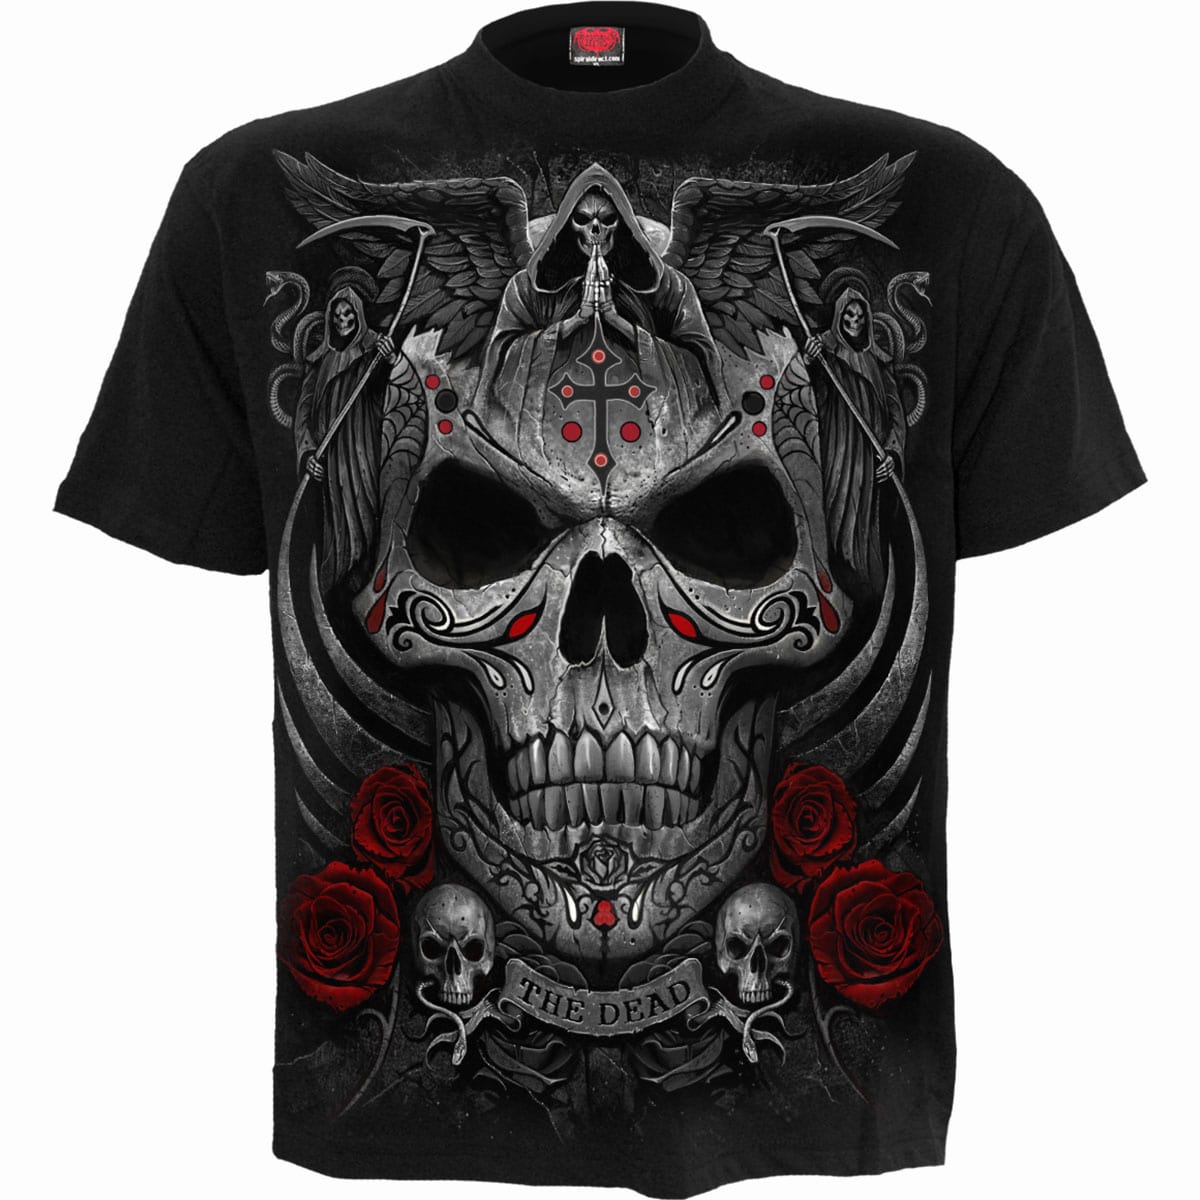 THE DEAD - T-Shirt Black